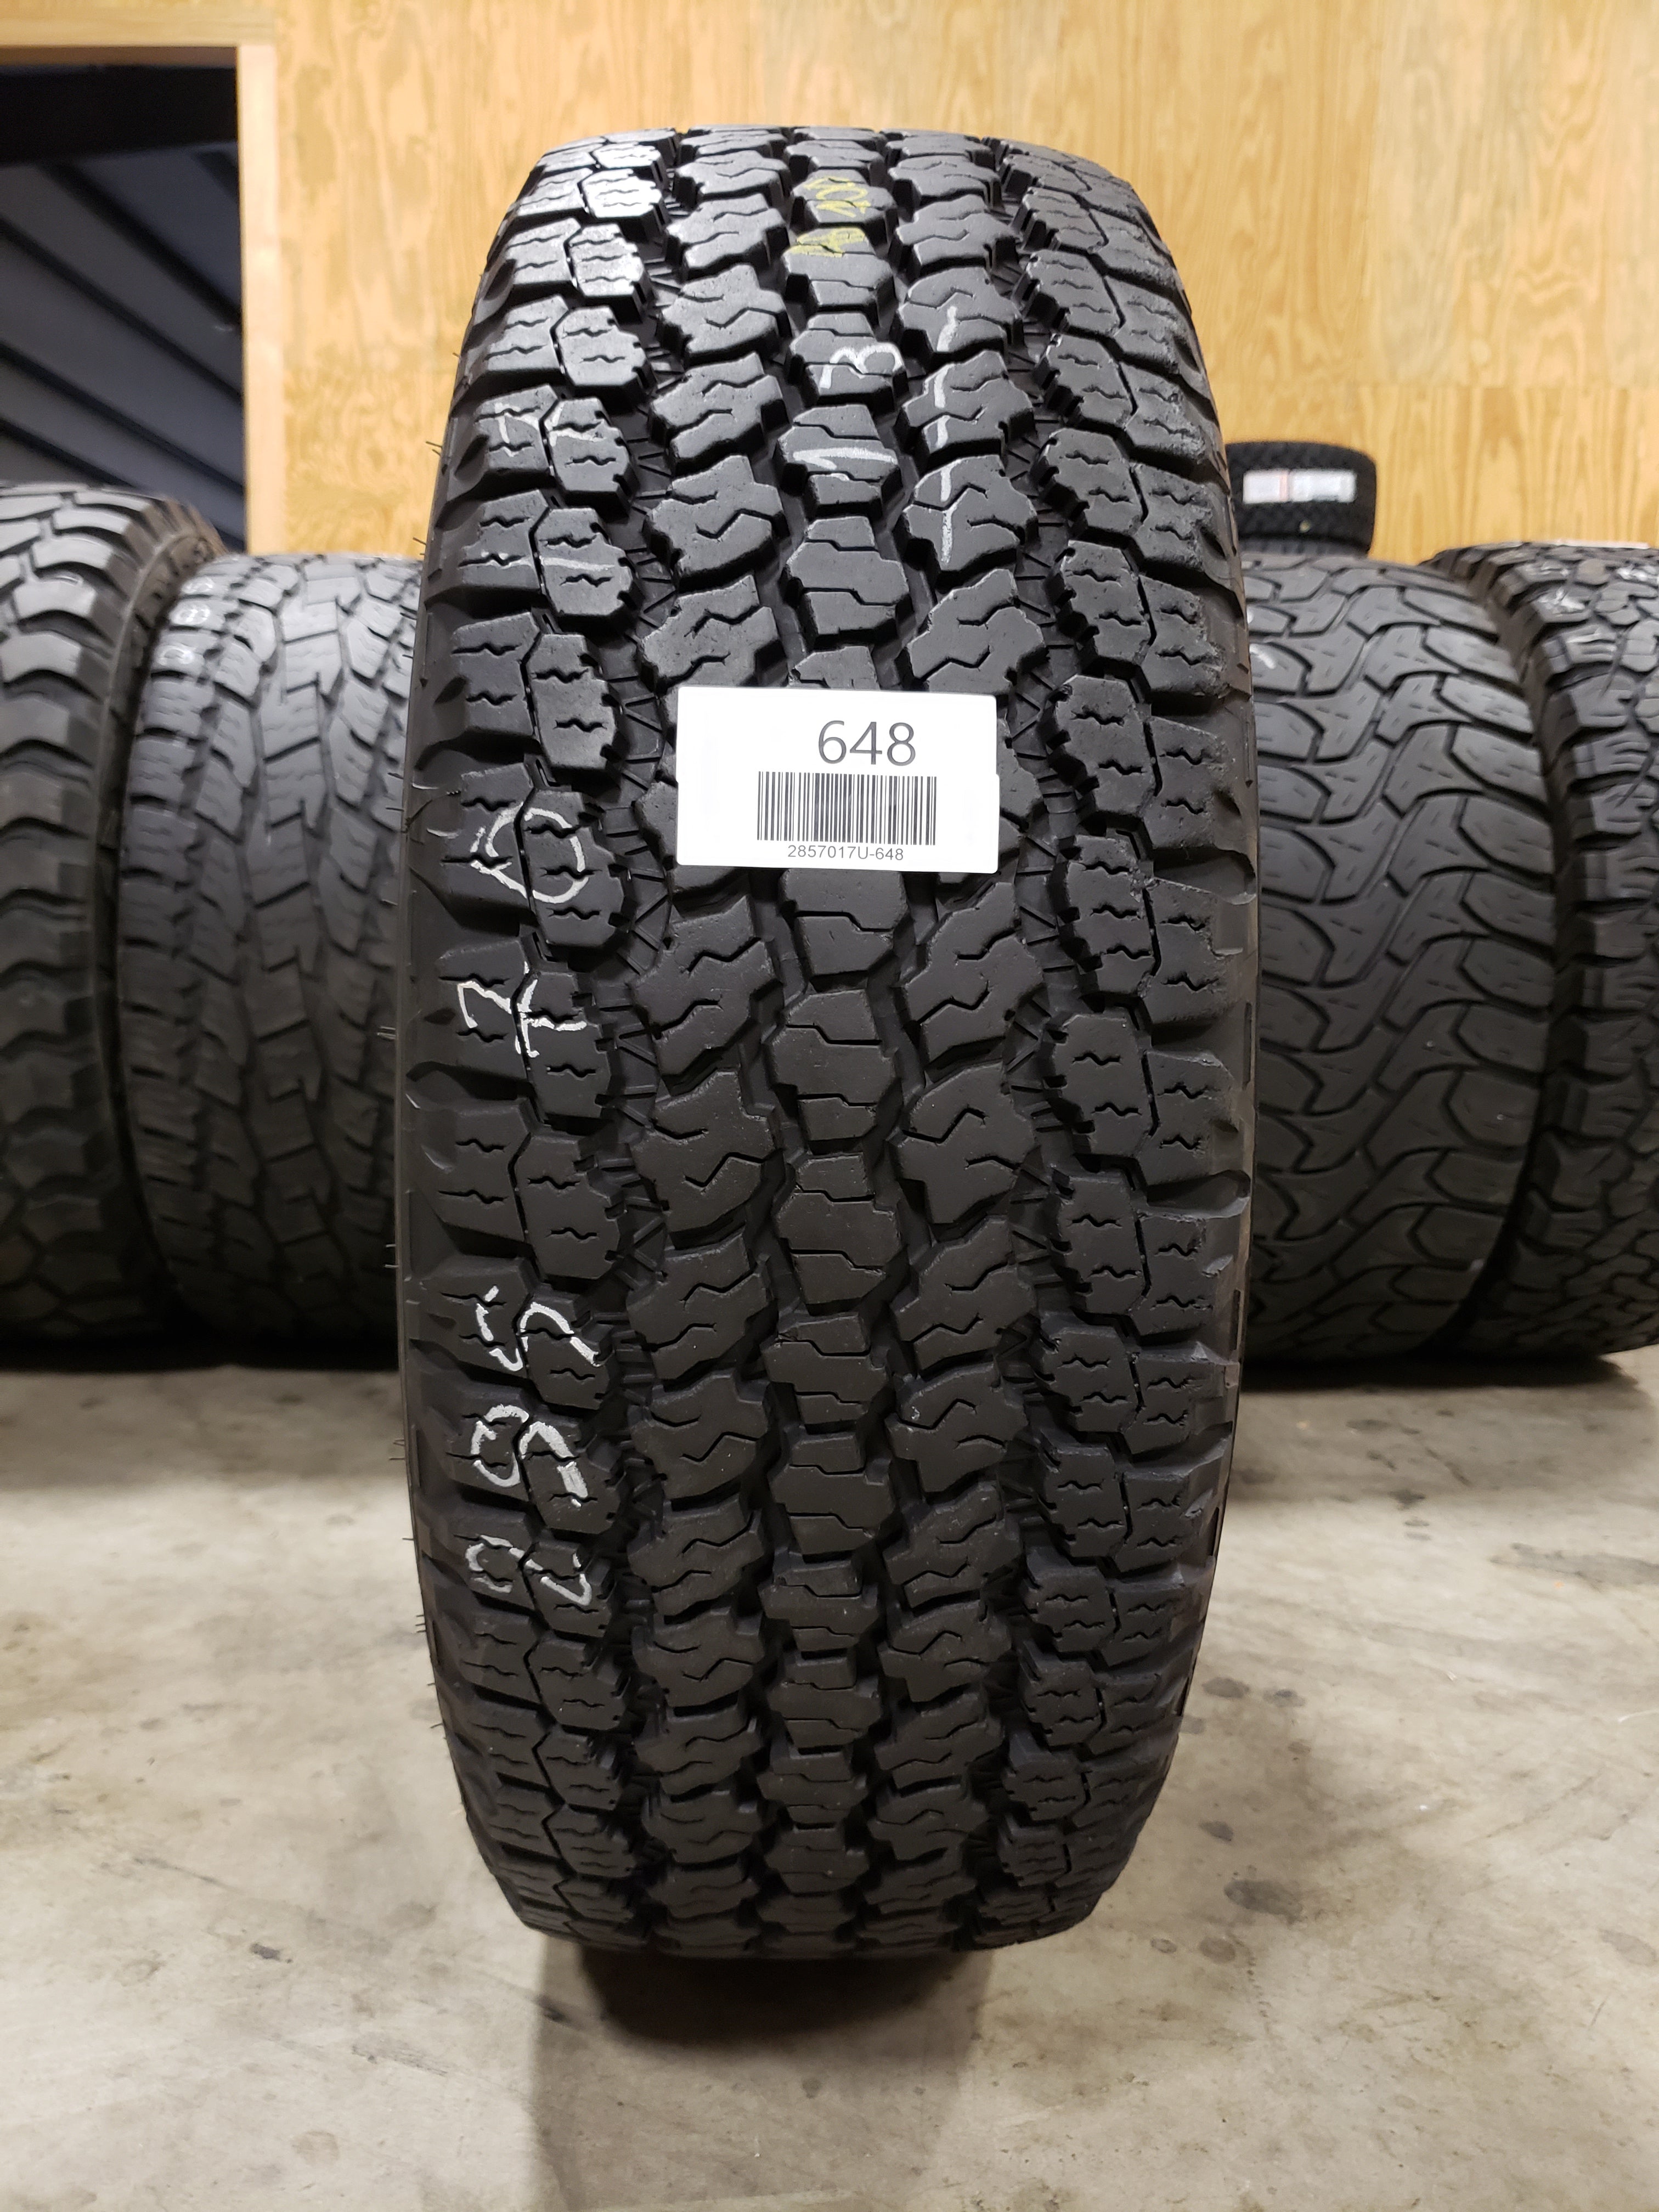 SINGLE 285/70R17 Goodyear Wrangler All-Terrain Aventure 121/118 R E - –  High Tread Used Tires